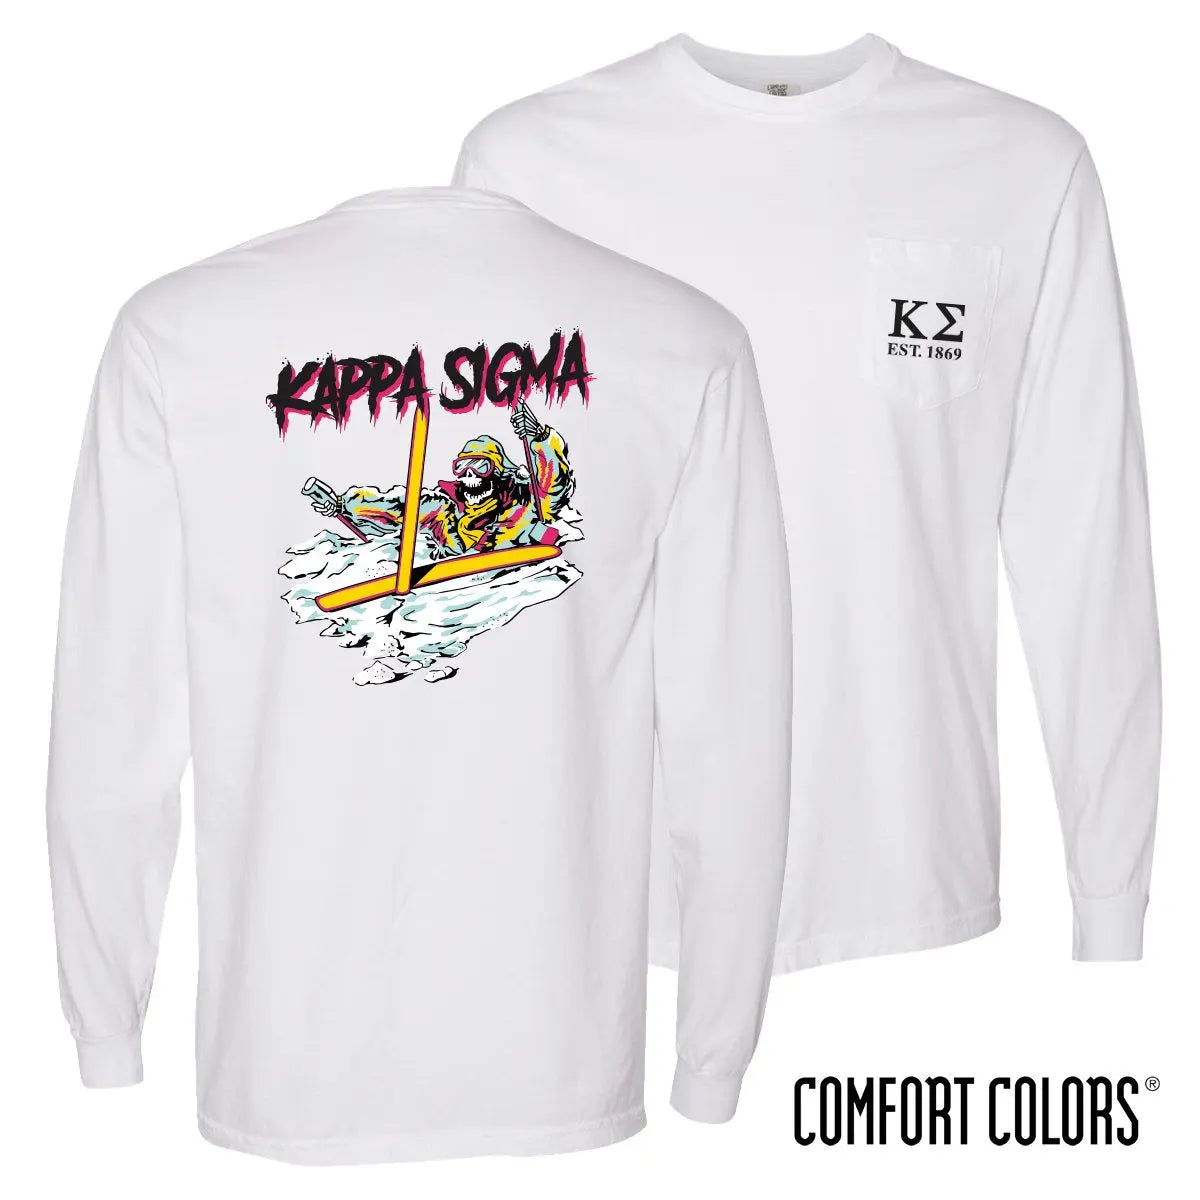 Kappa Sig Comfort Colors White Long Sleeve Ski-leton Tee Kappa Sigma Official